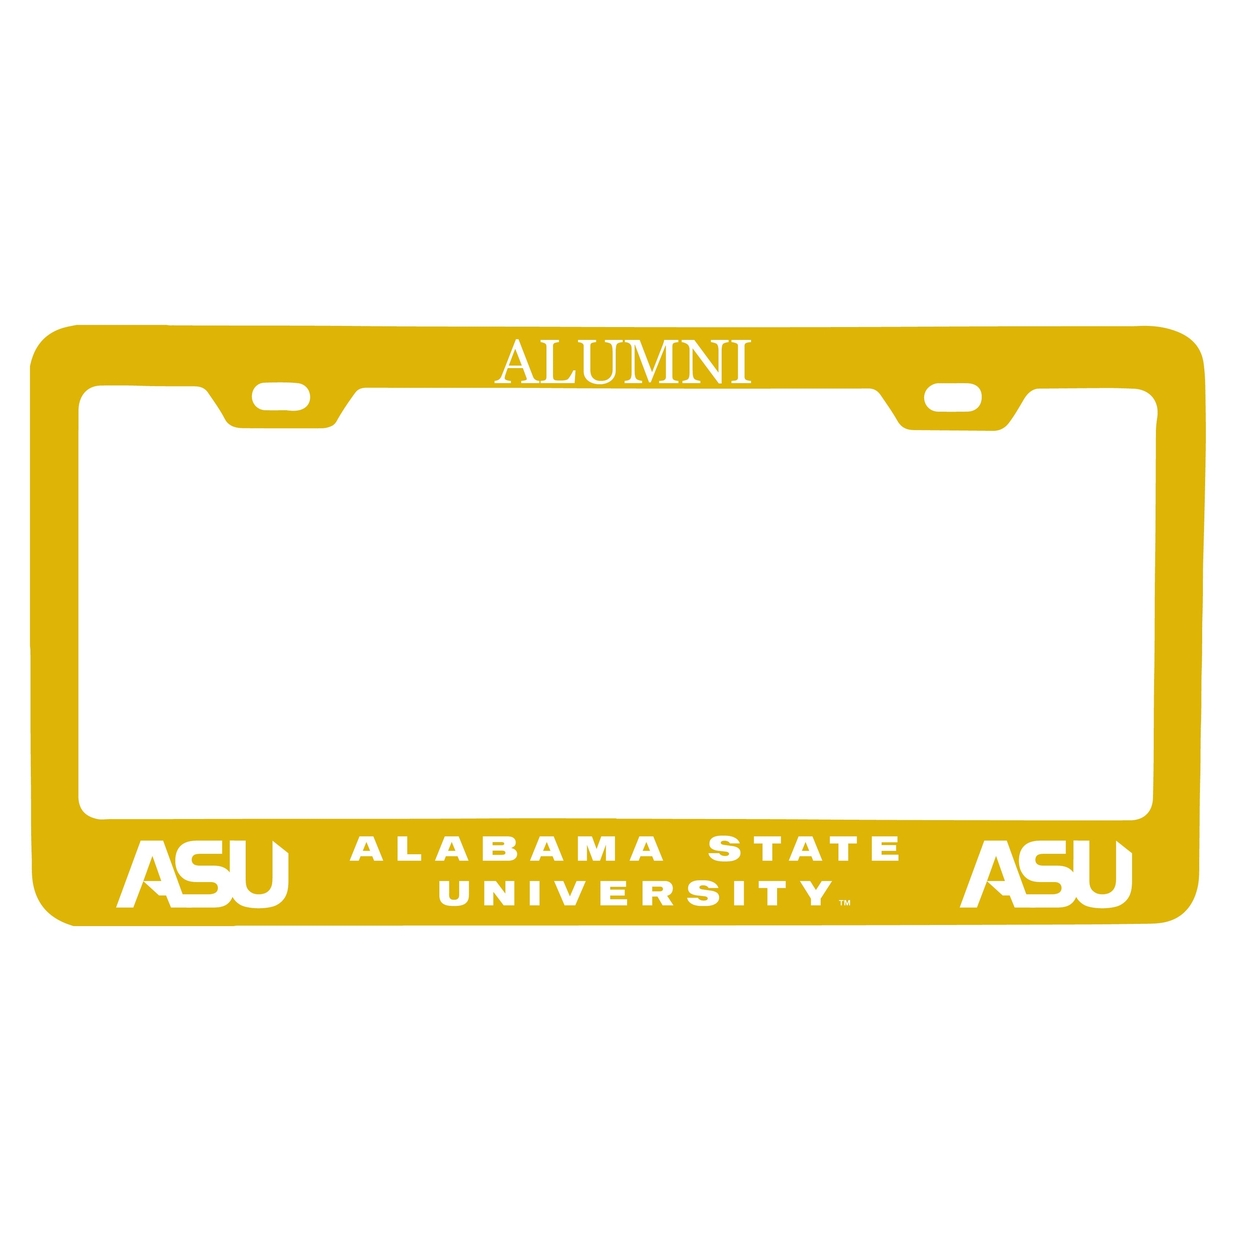 Alabama State University Alumni License Plate Frame